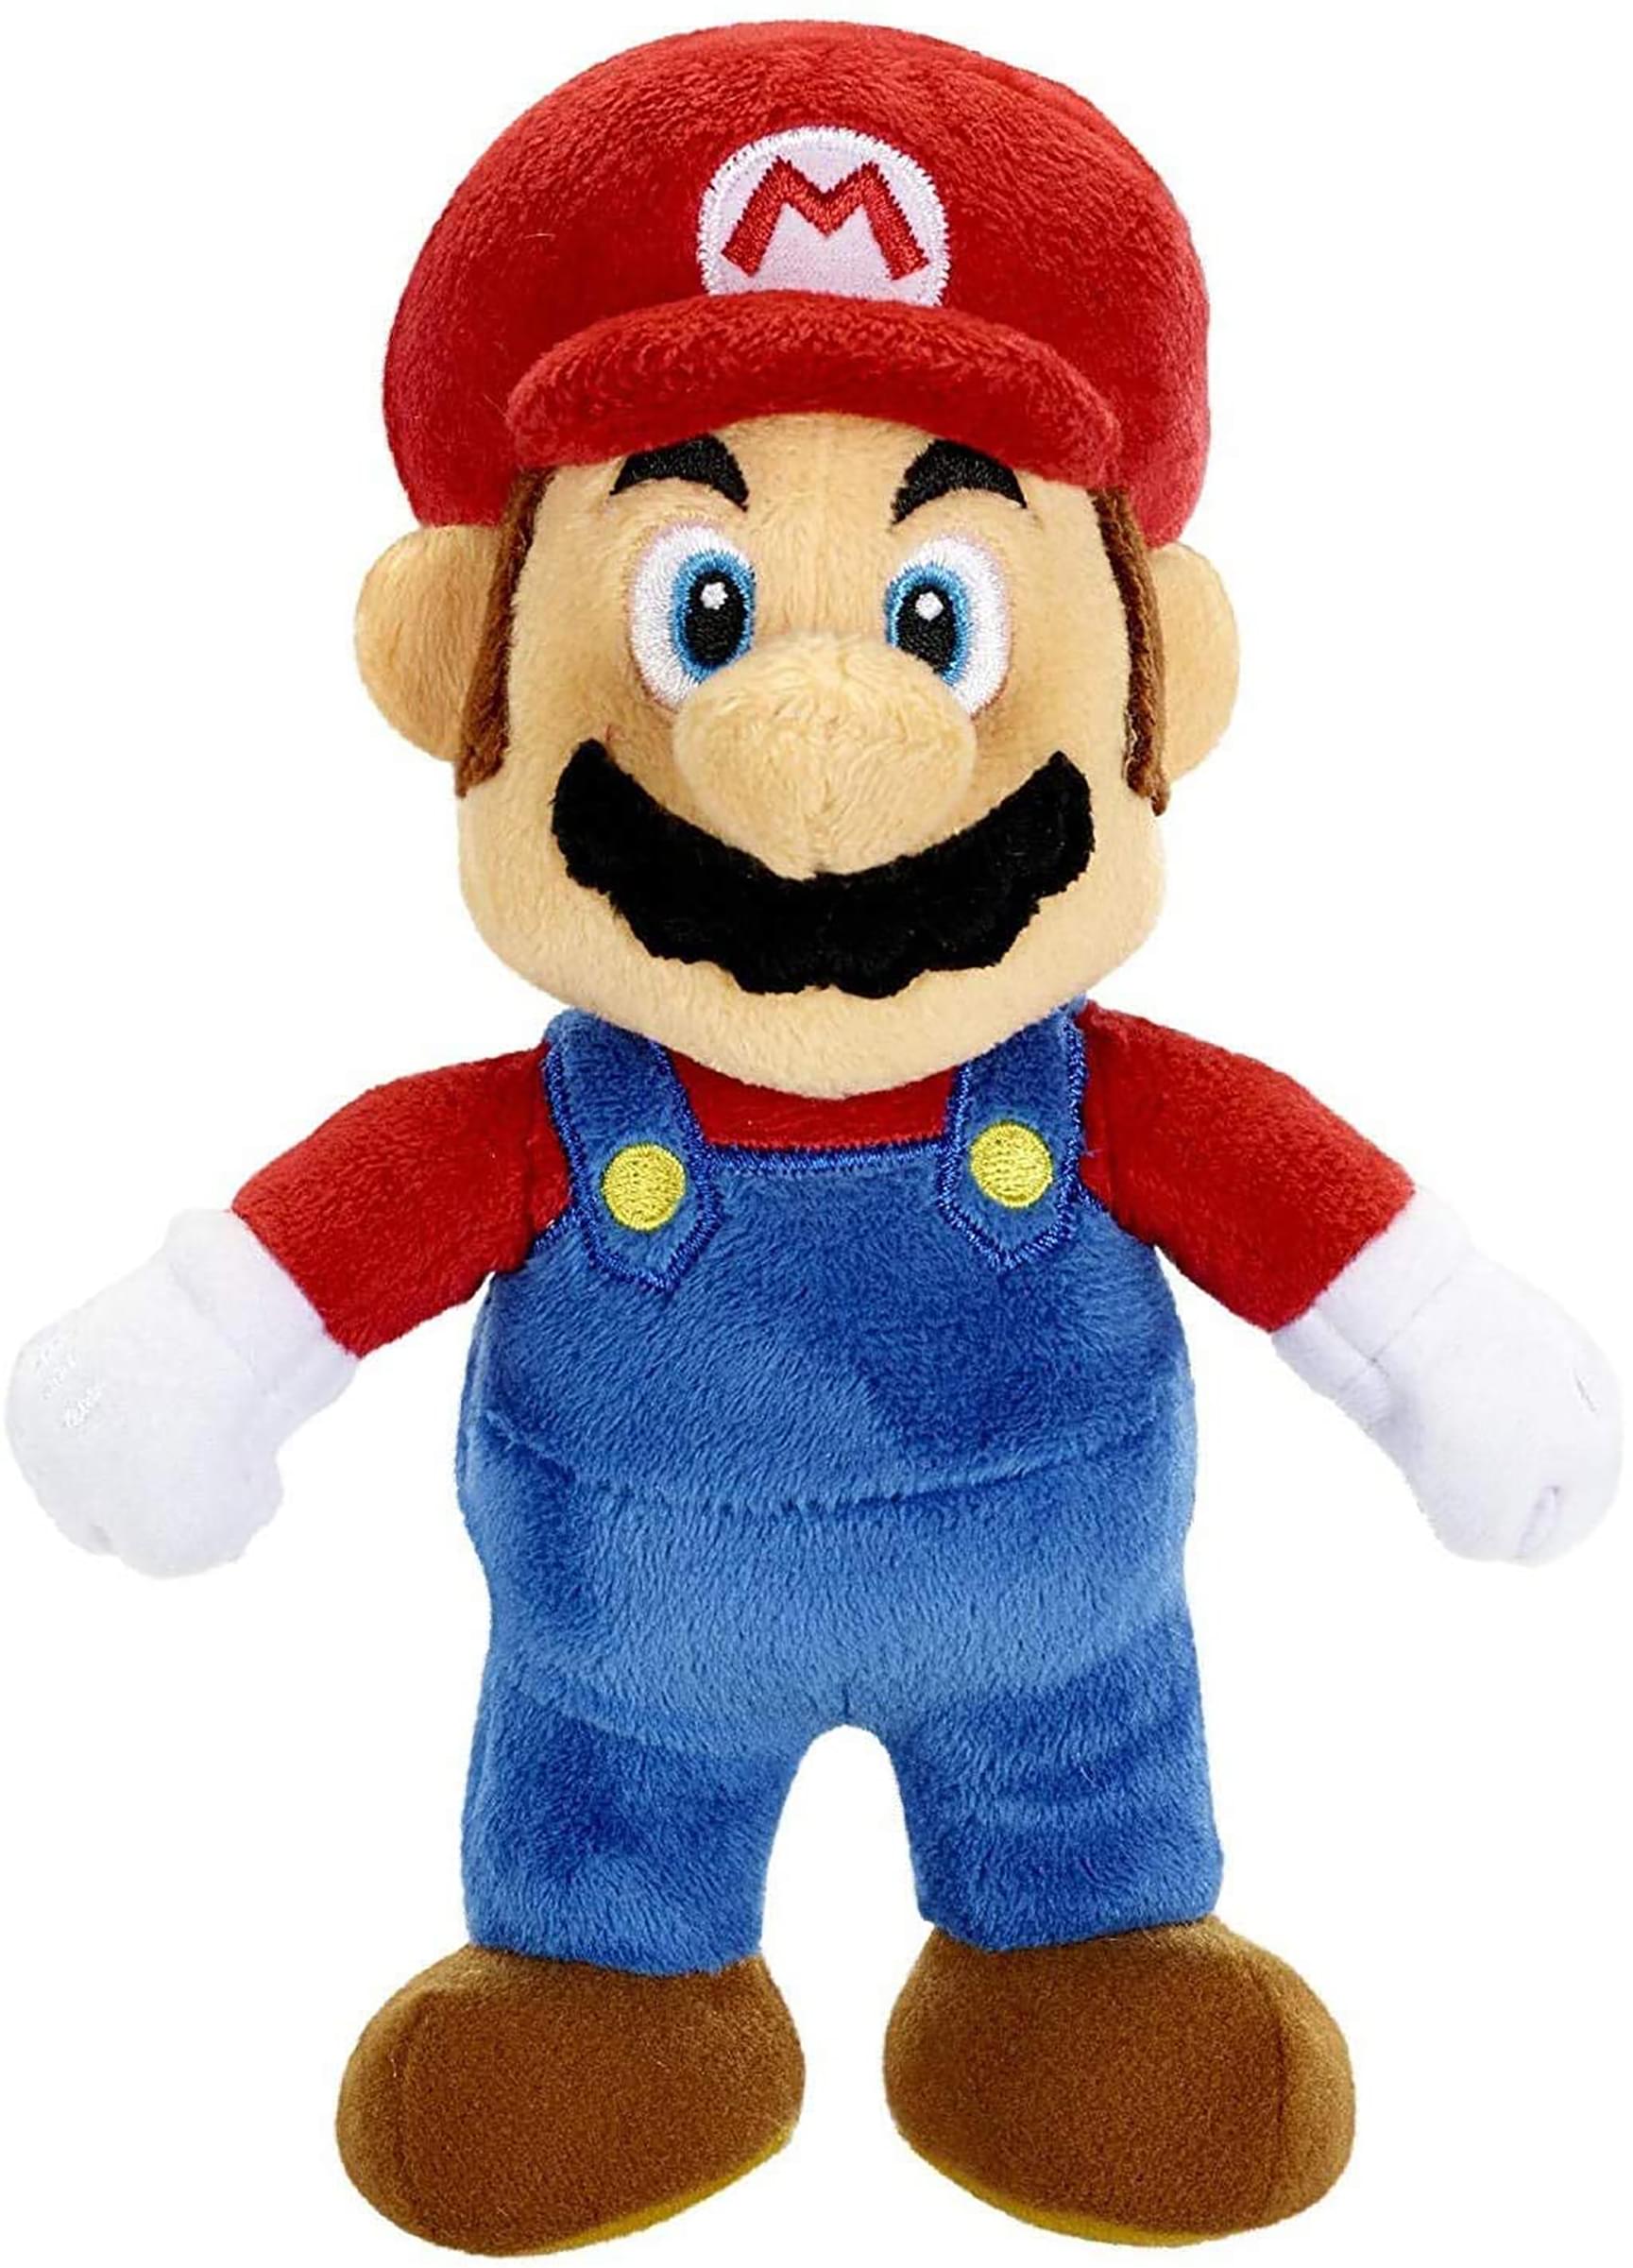 Super Mario World of Nintendo 7 Inch Plush | Mario